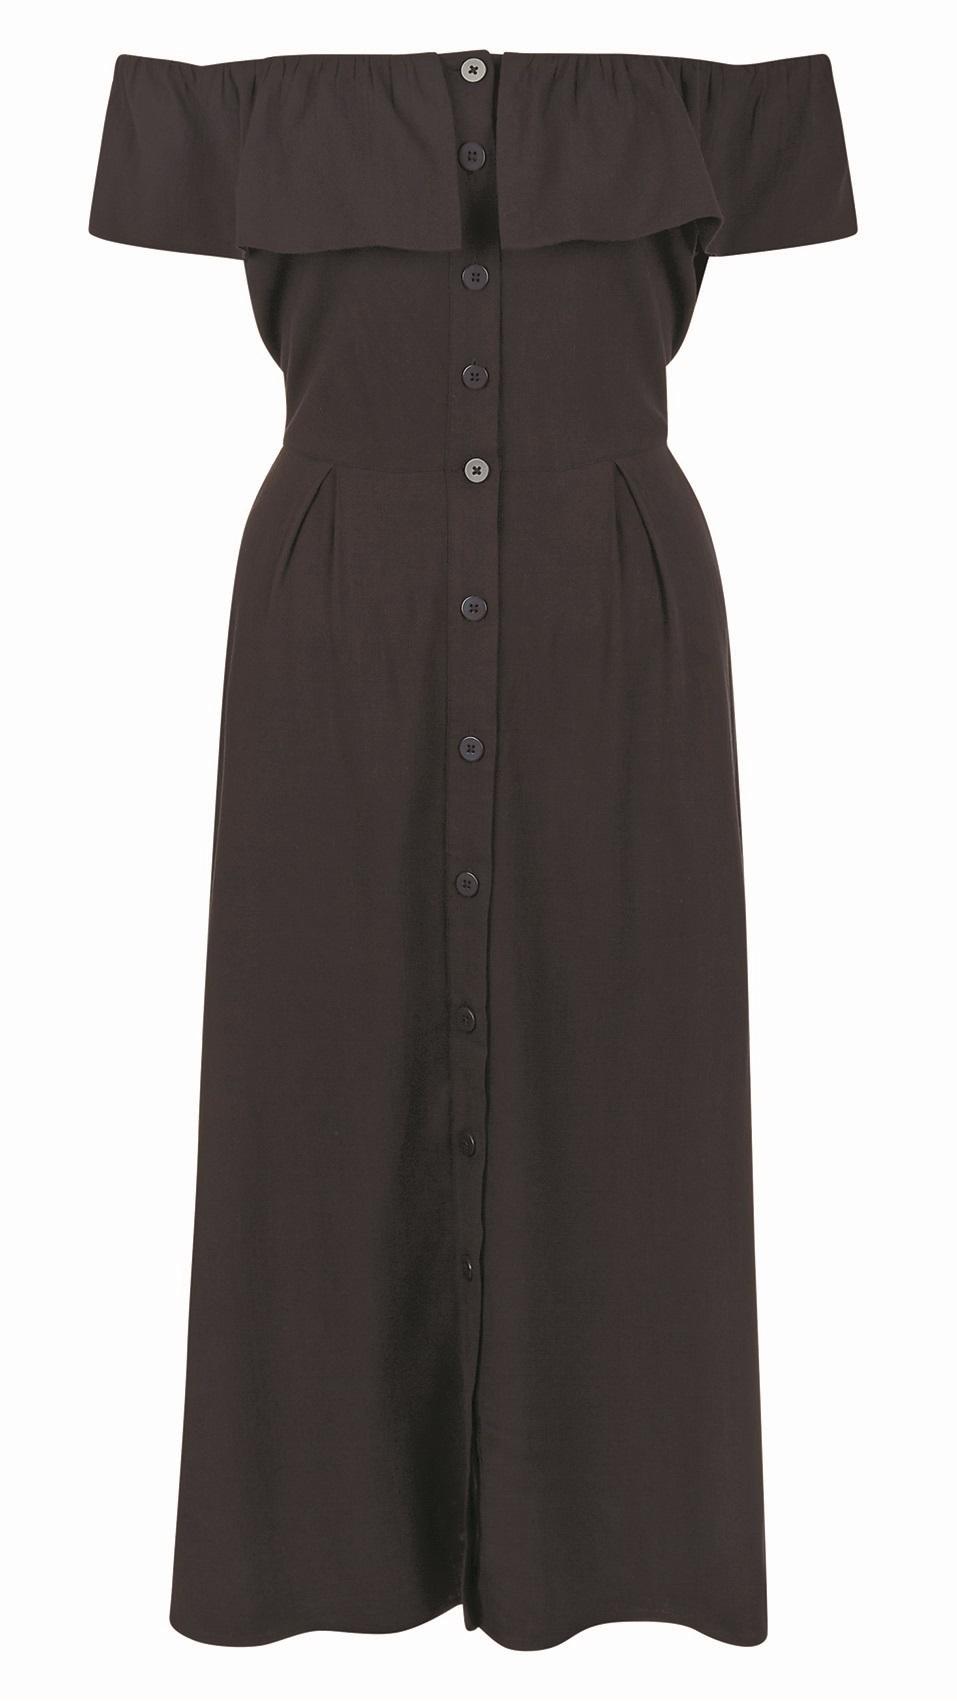 New Look, Black Ruffle Bardot Neck Midi Dress, £24.99